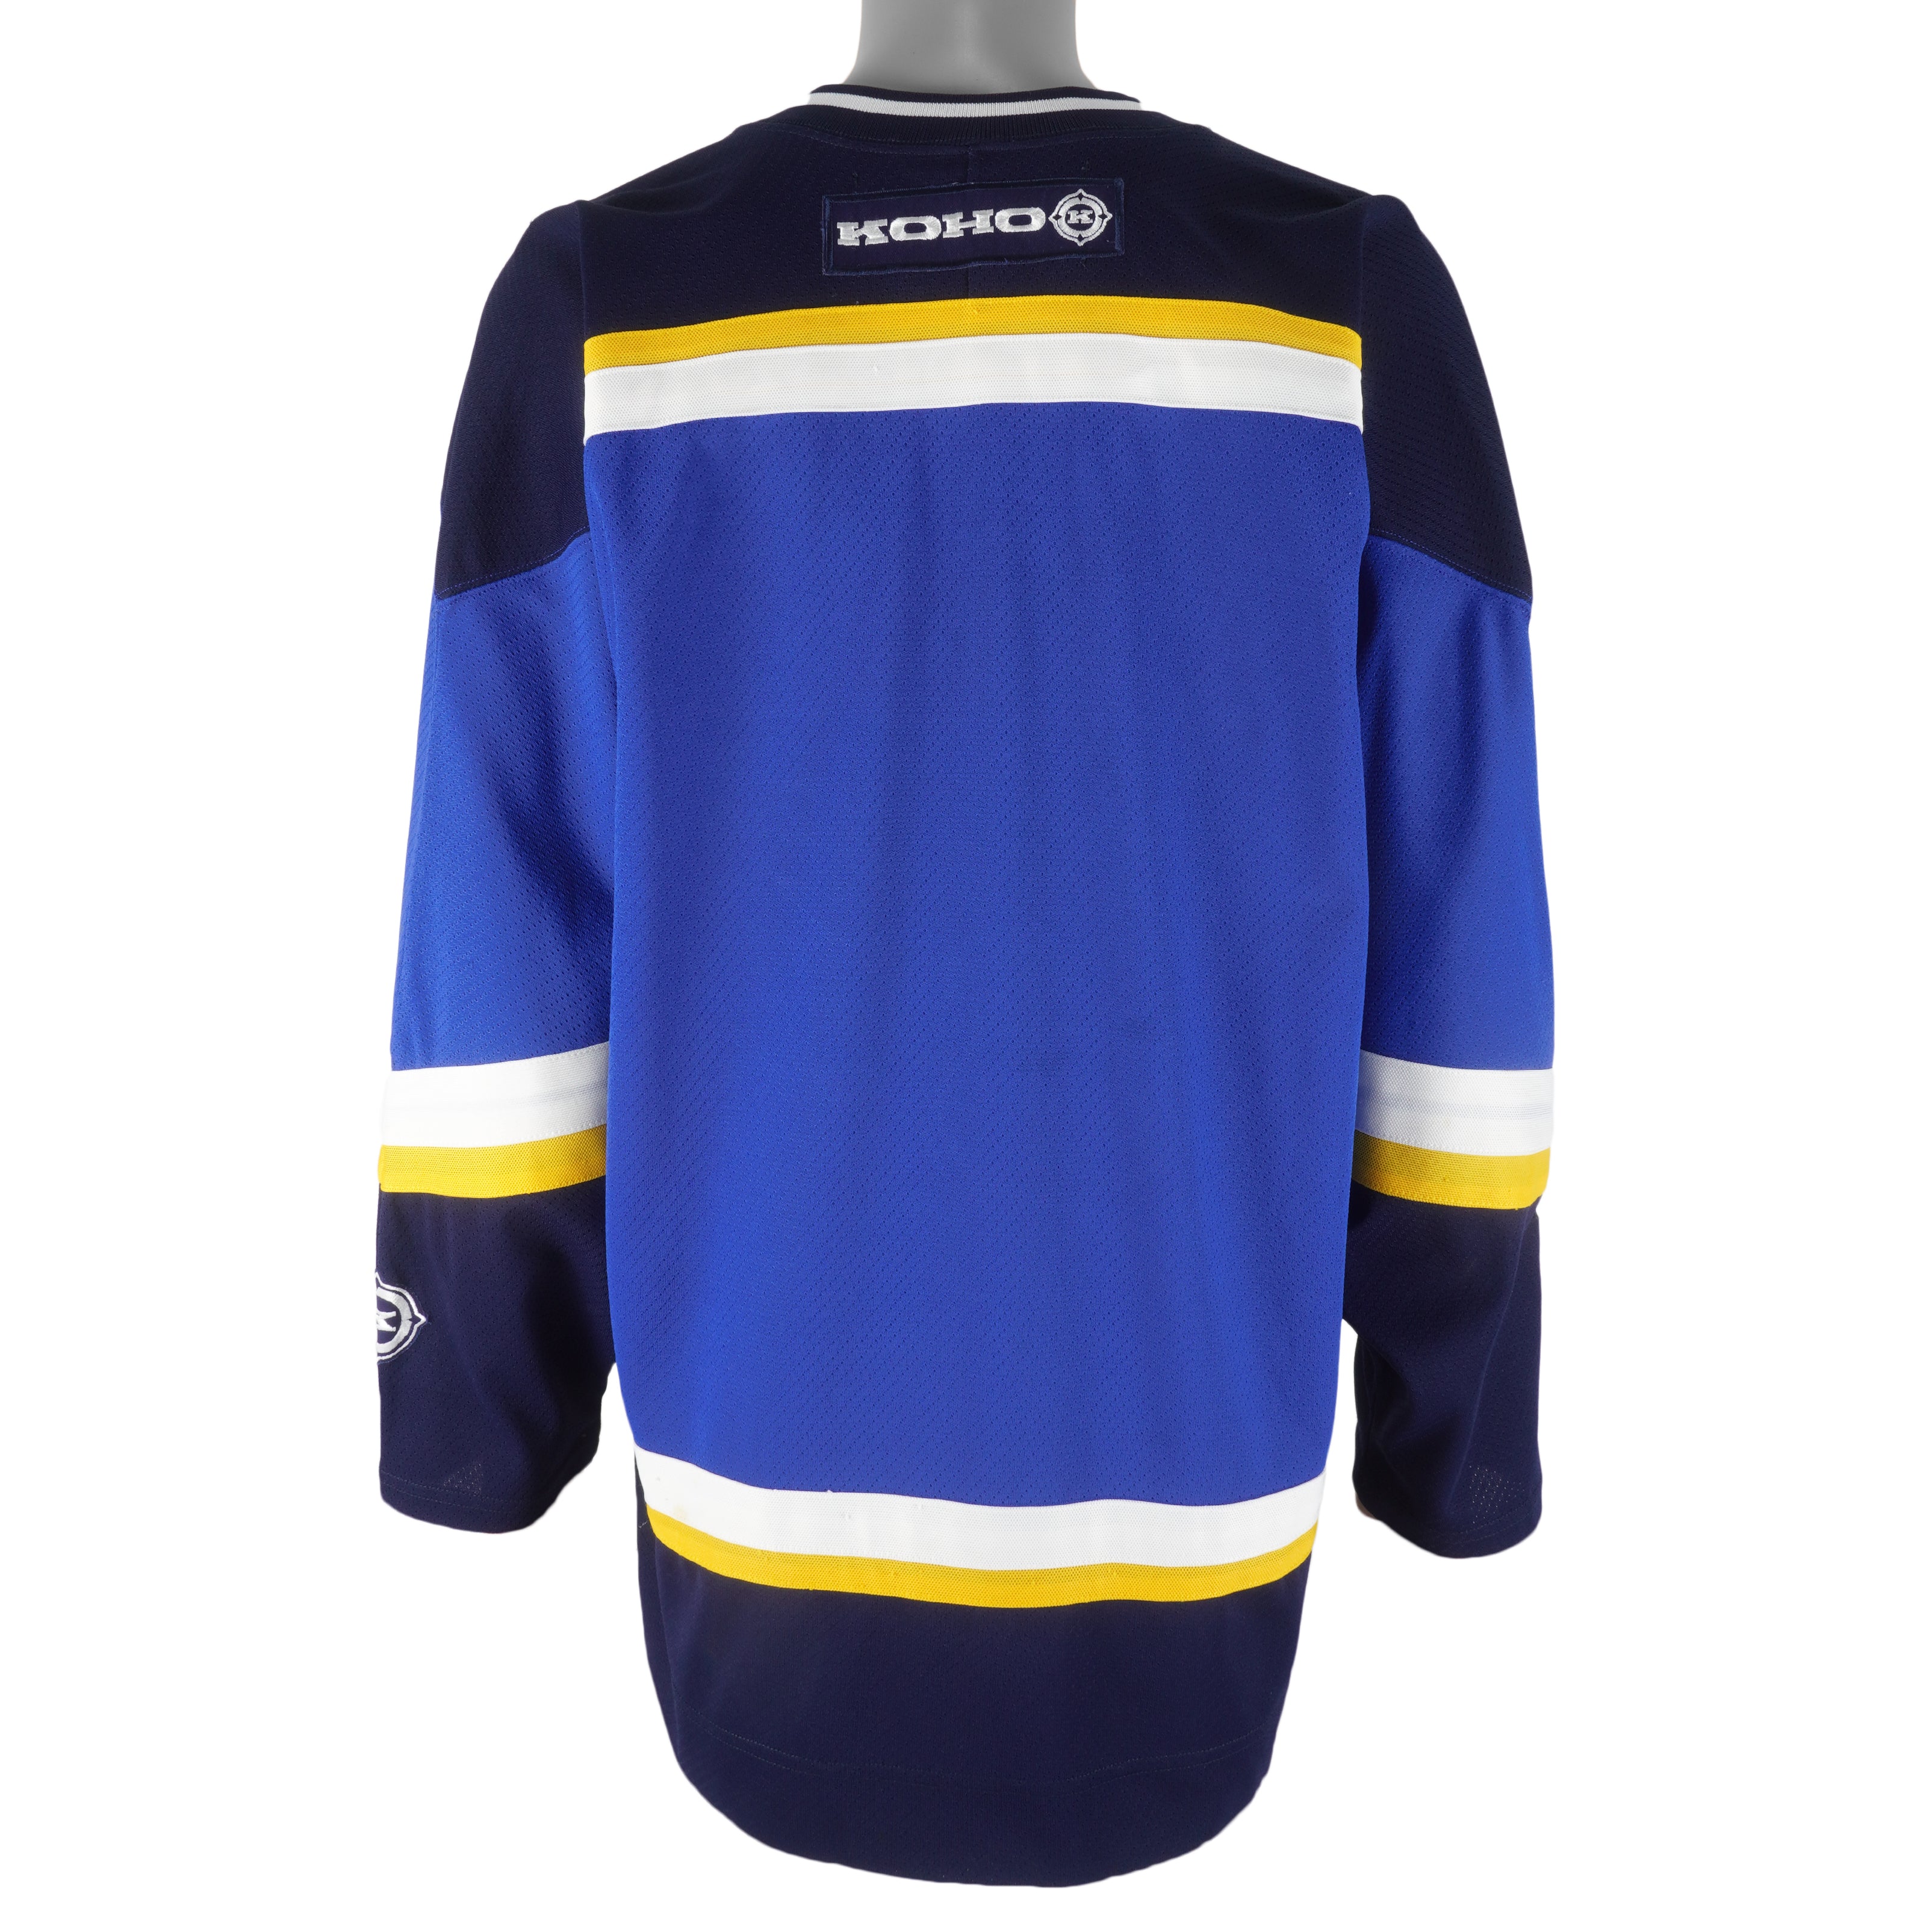 New Reebok Toronto Maple Leafs Blank Jersey NHL Hockey Blue 